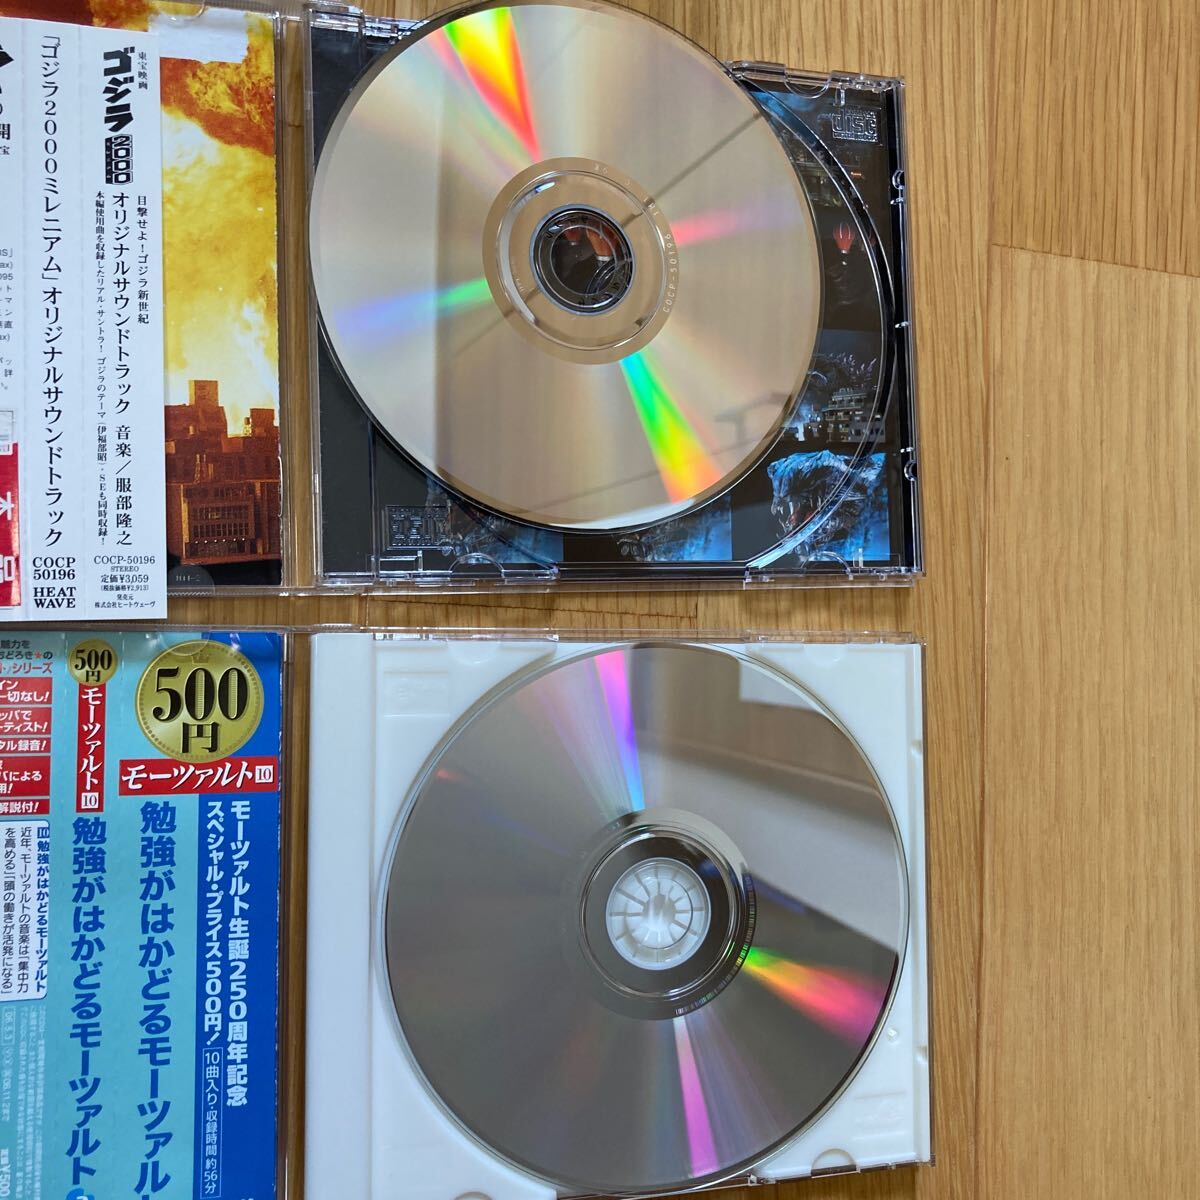 CD 2 sheets Classic GODZILLA 2000mo-tsaruto Godzilla millenium special effects Gamera King Giddra Mothra ba is 